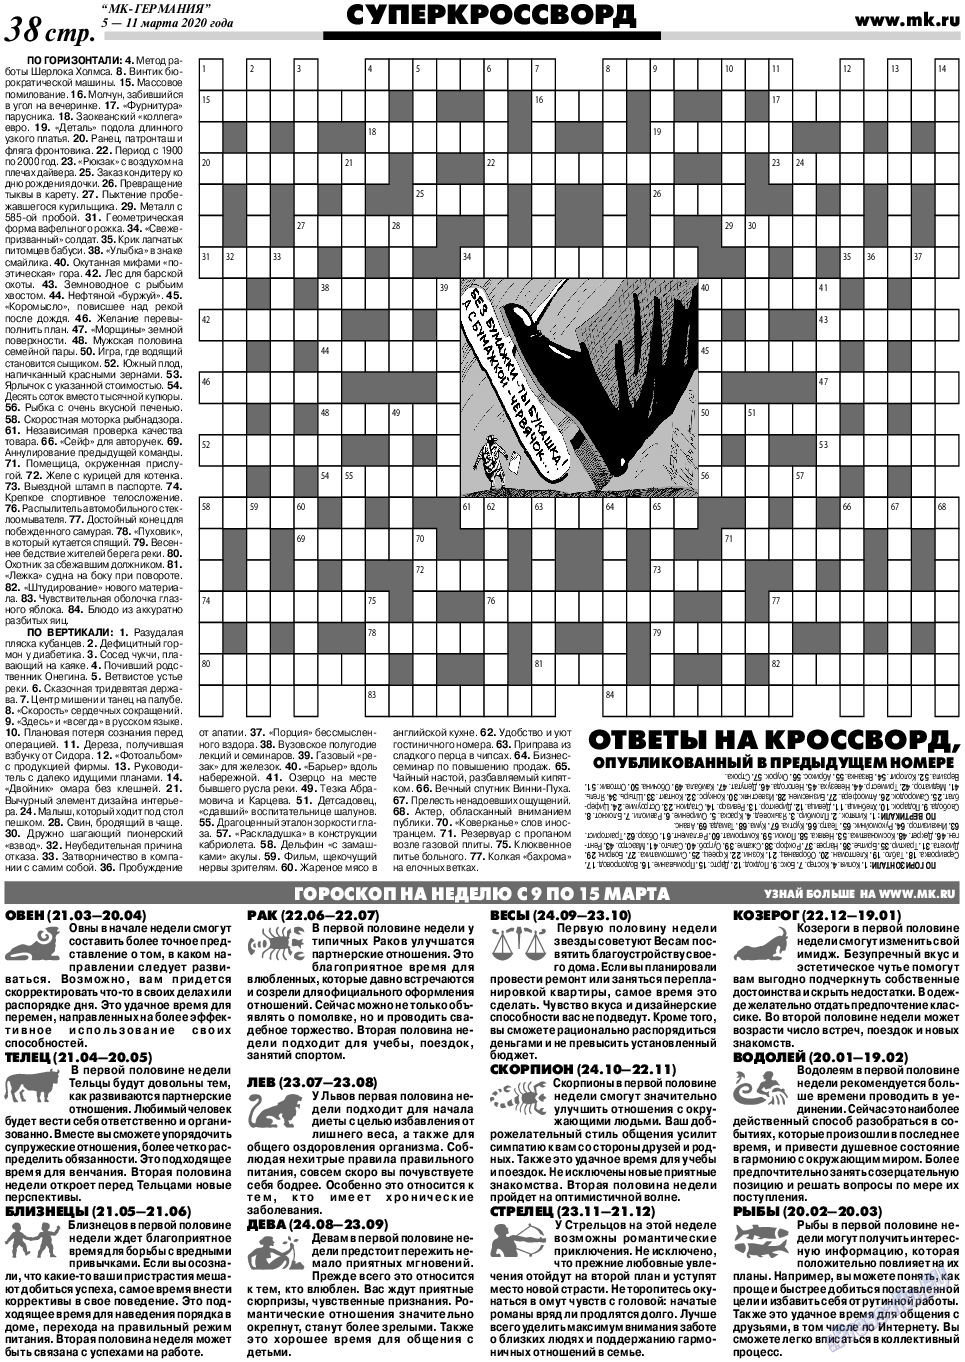 МК-Германия, газета. 2020 №10 стр.38